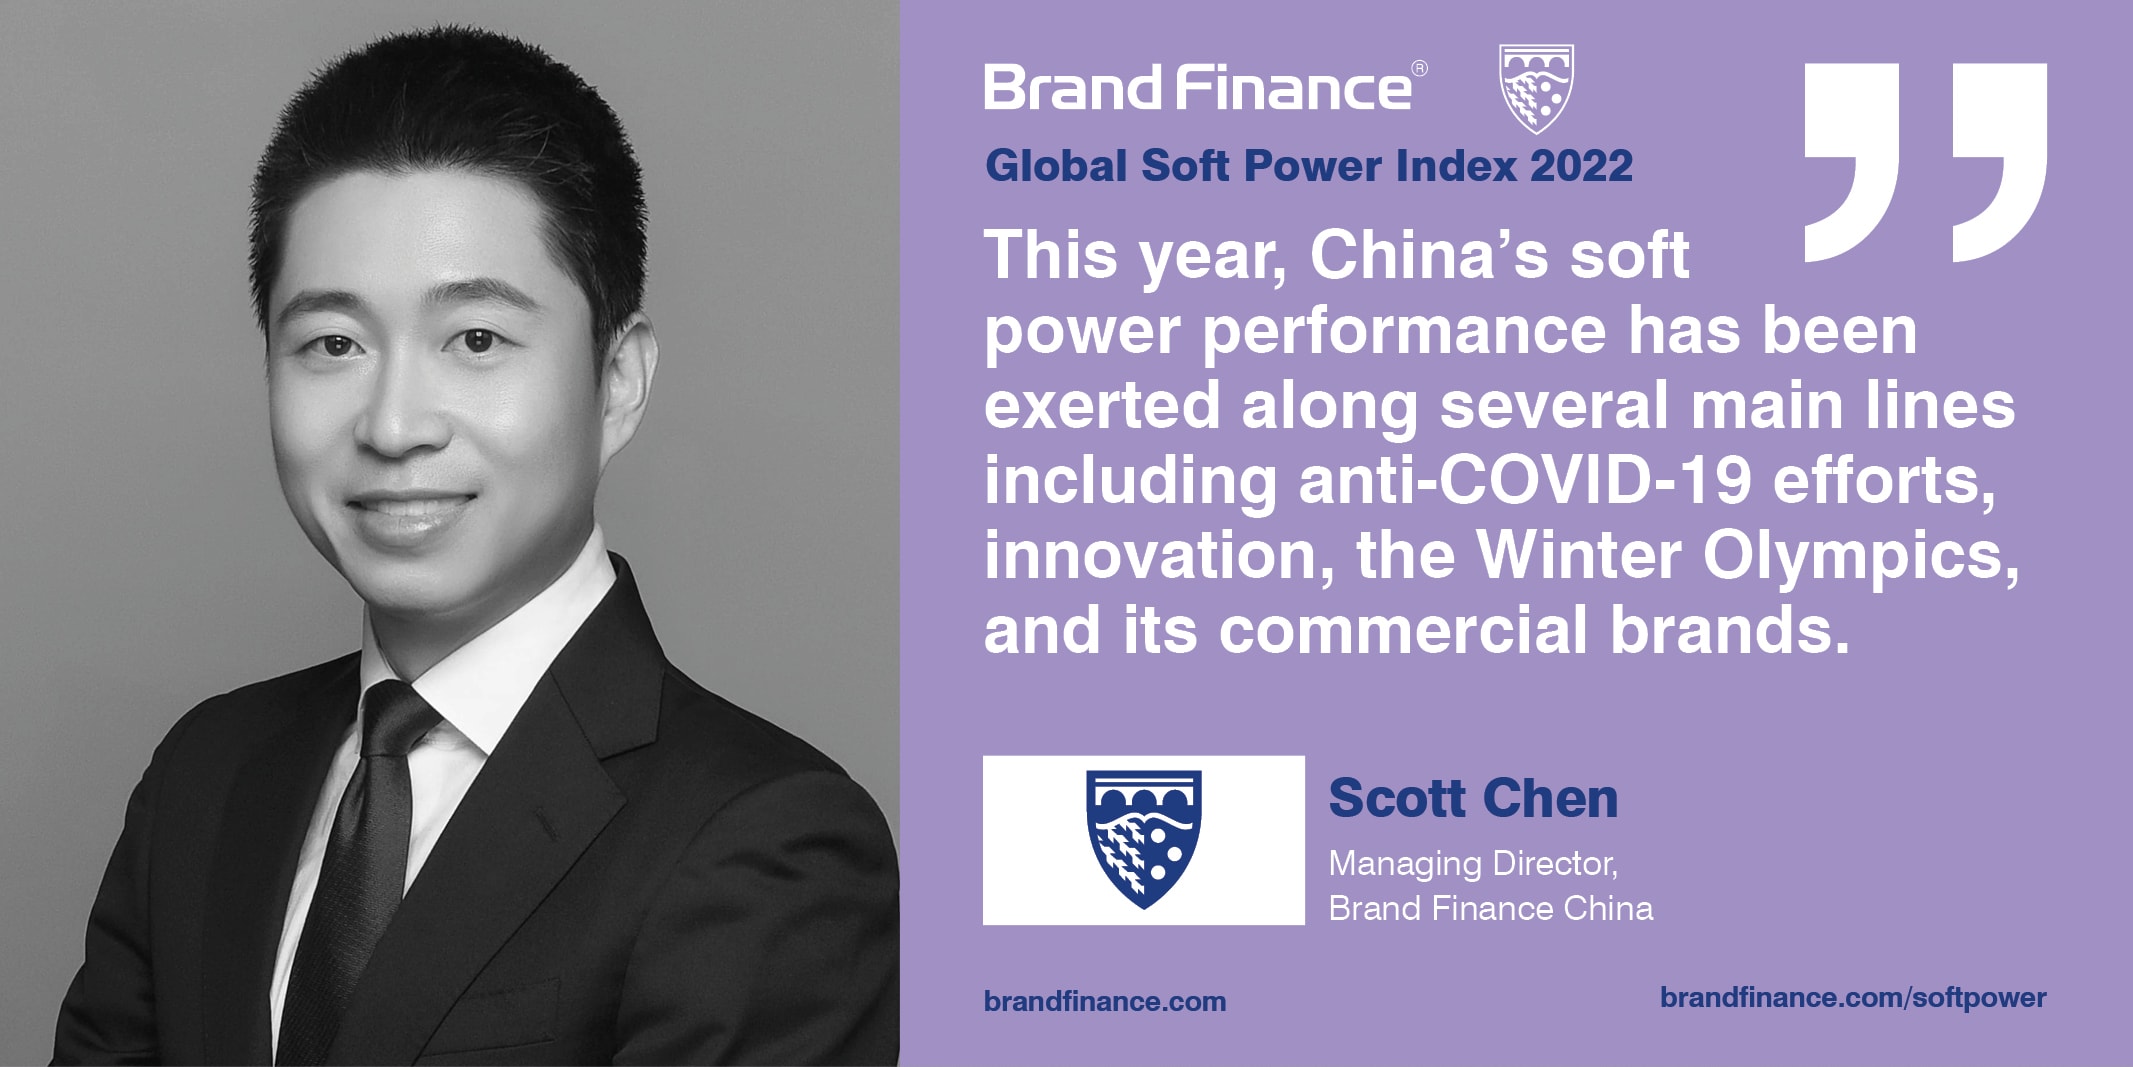 Scott Chen, Managing Director, Brand Finance China